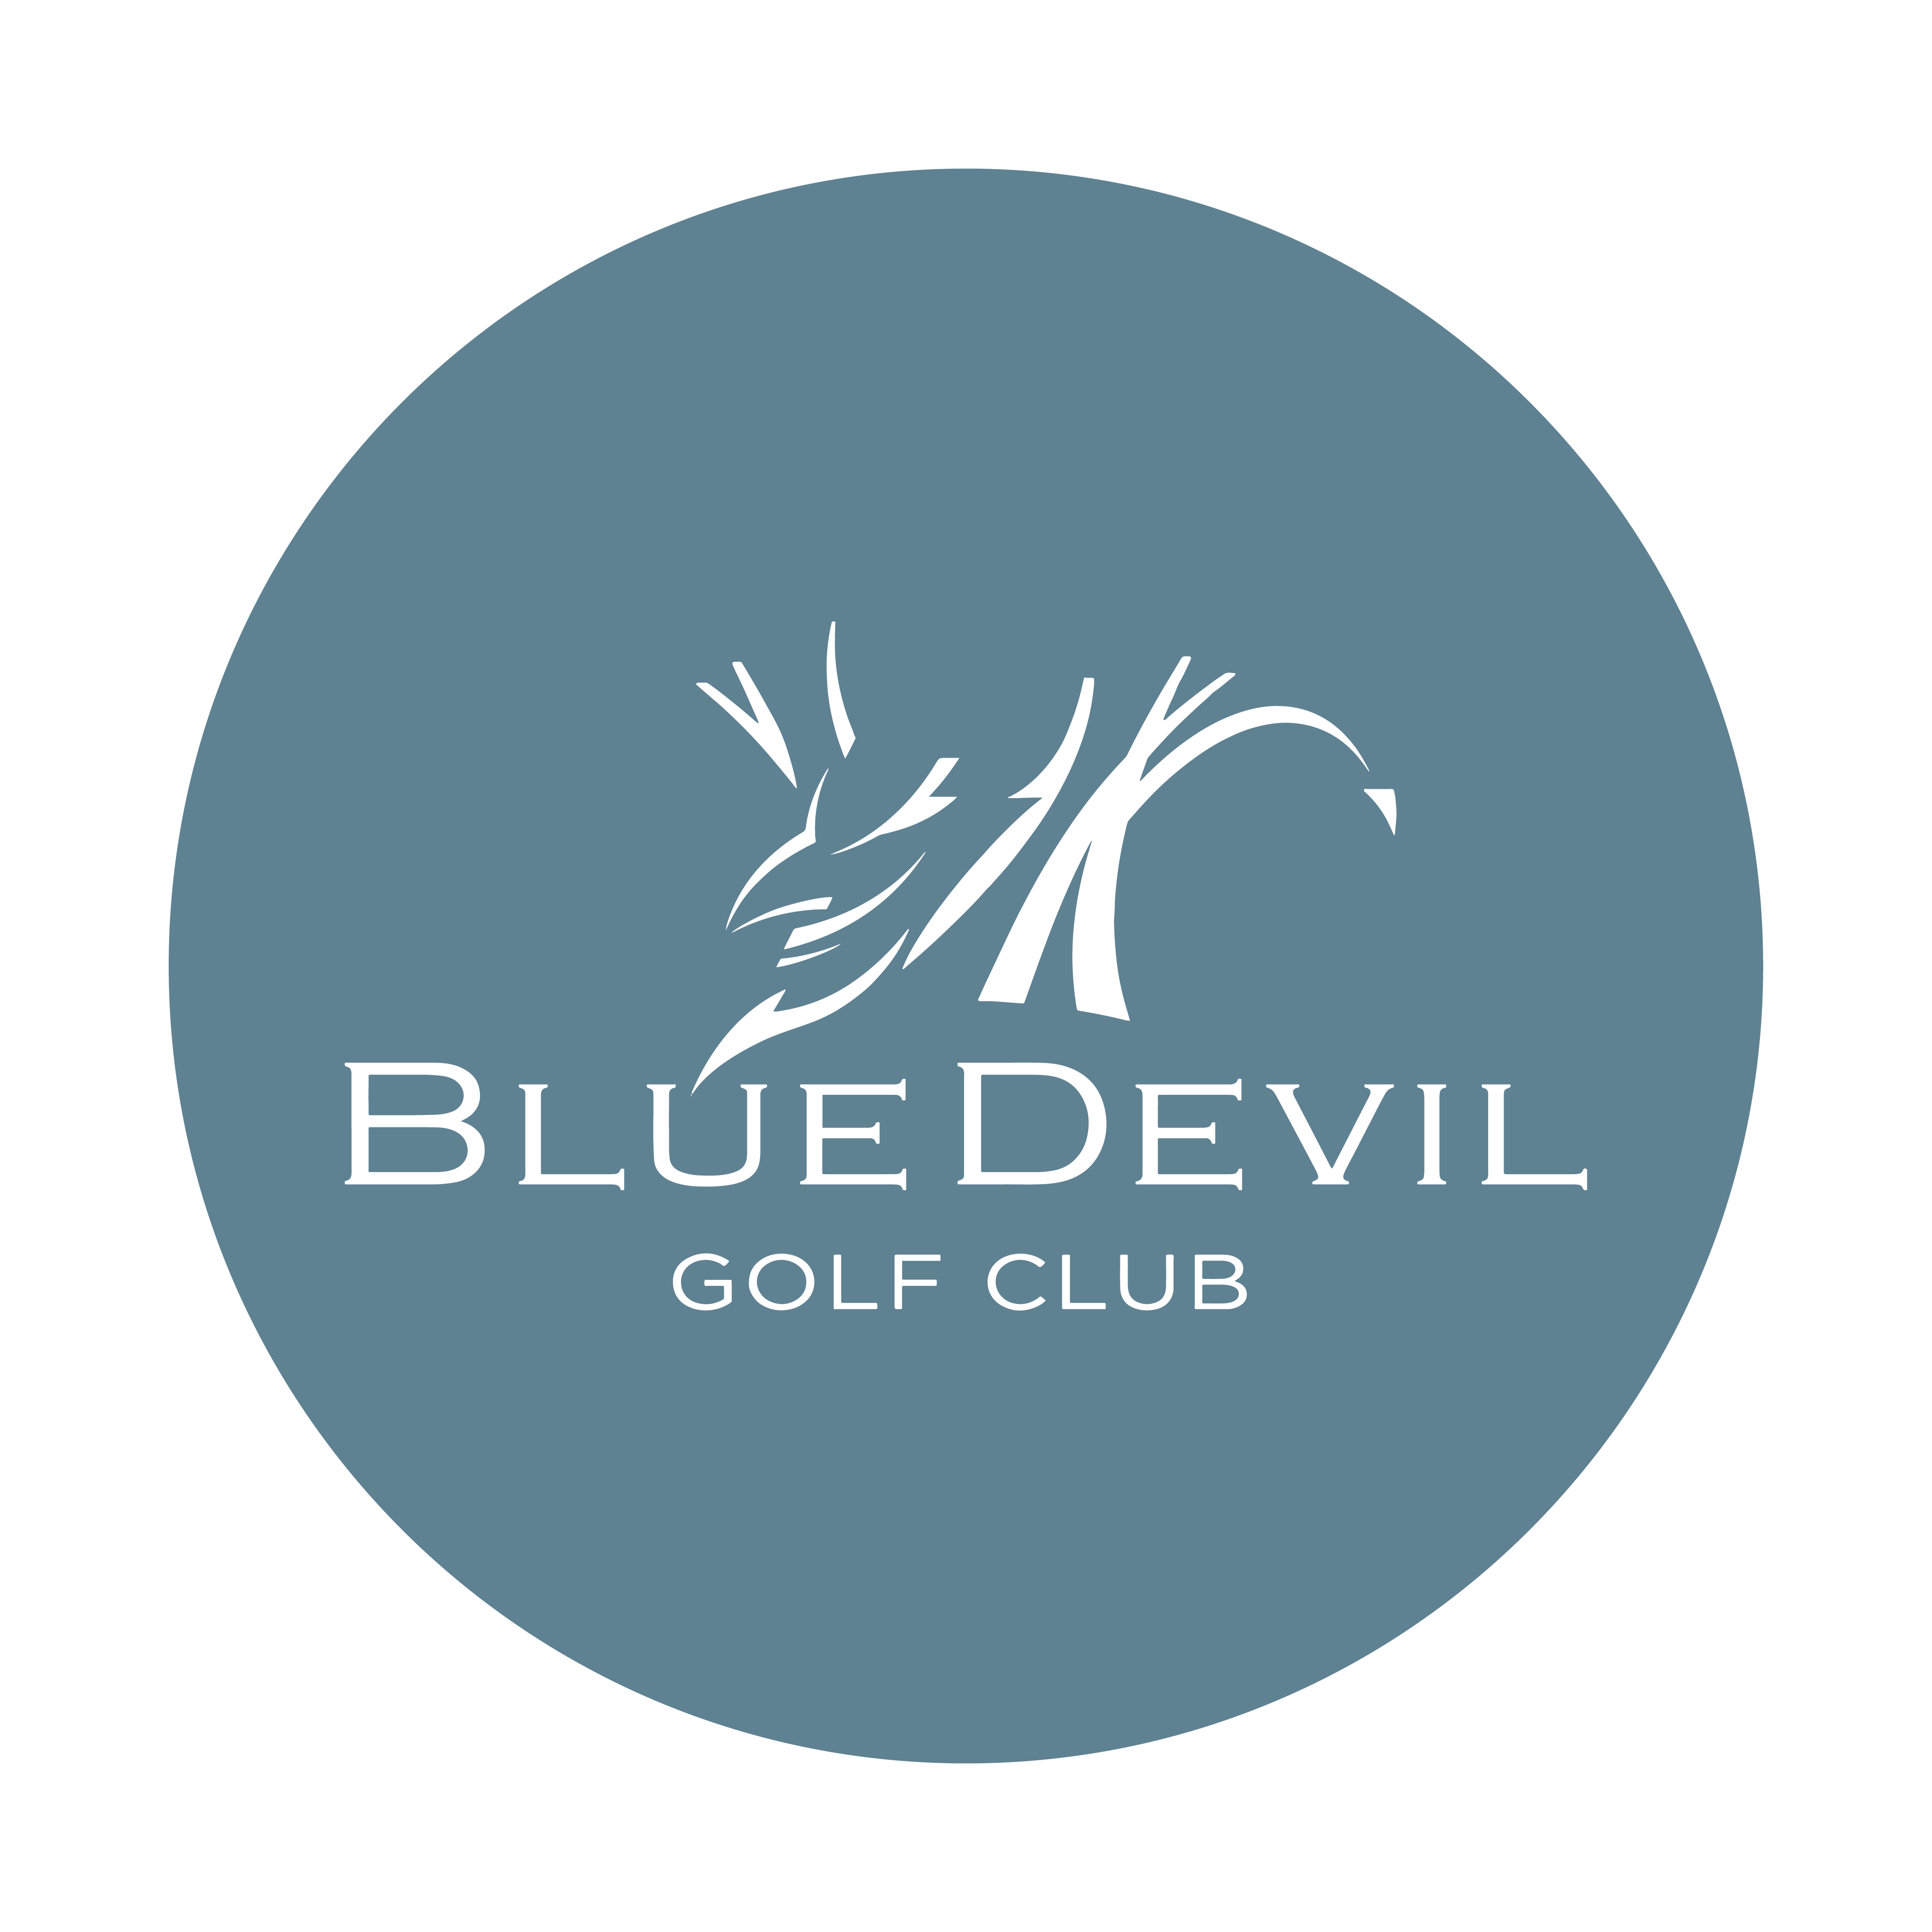 BLUE DEVIL GOLF CLUB